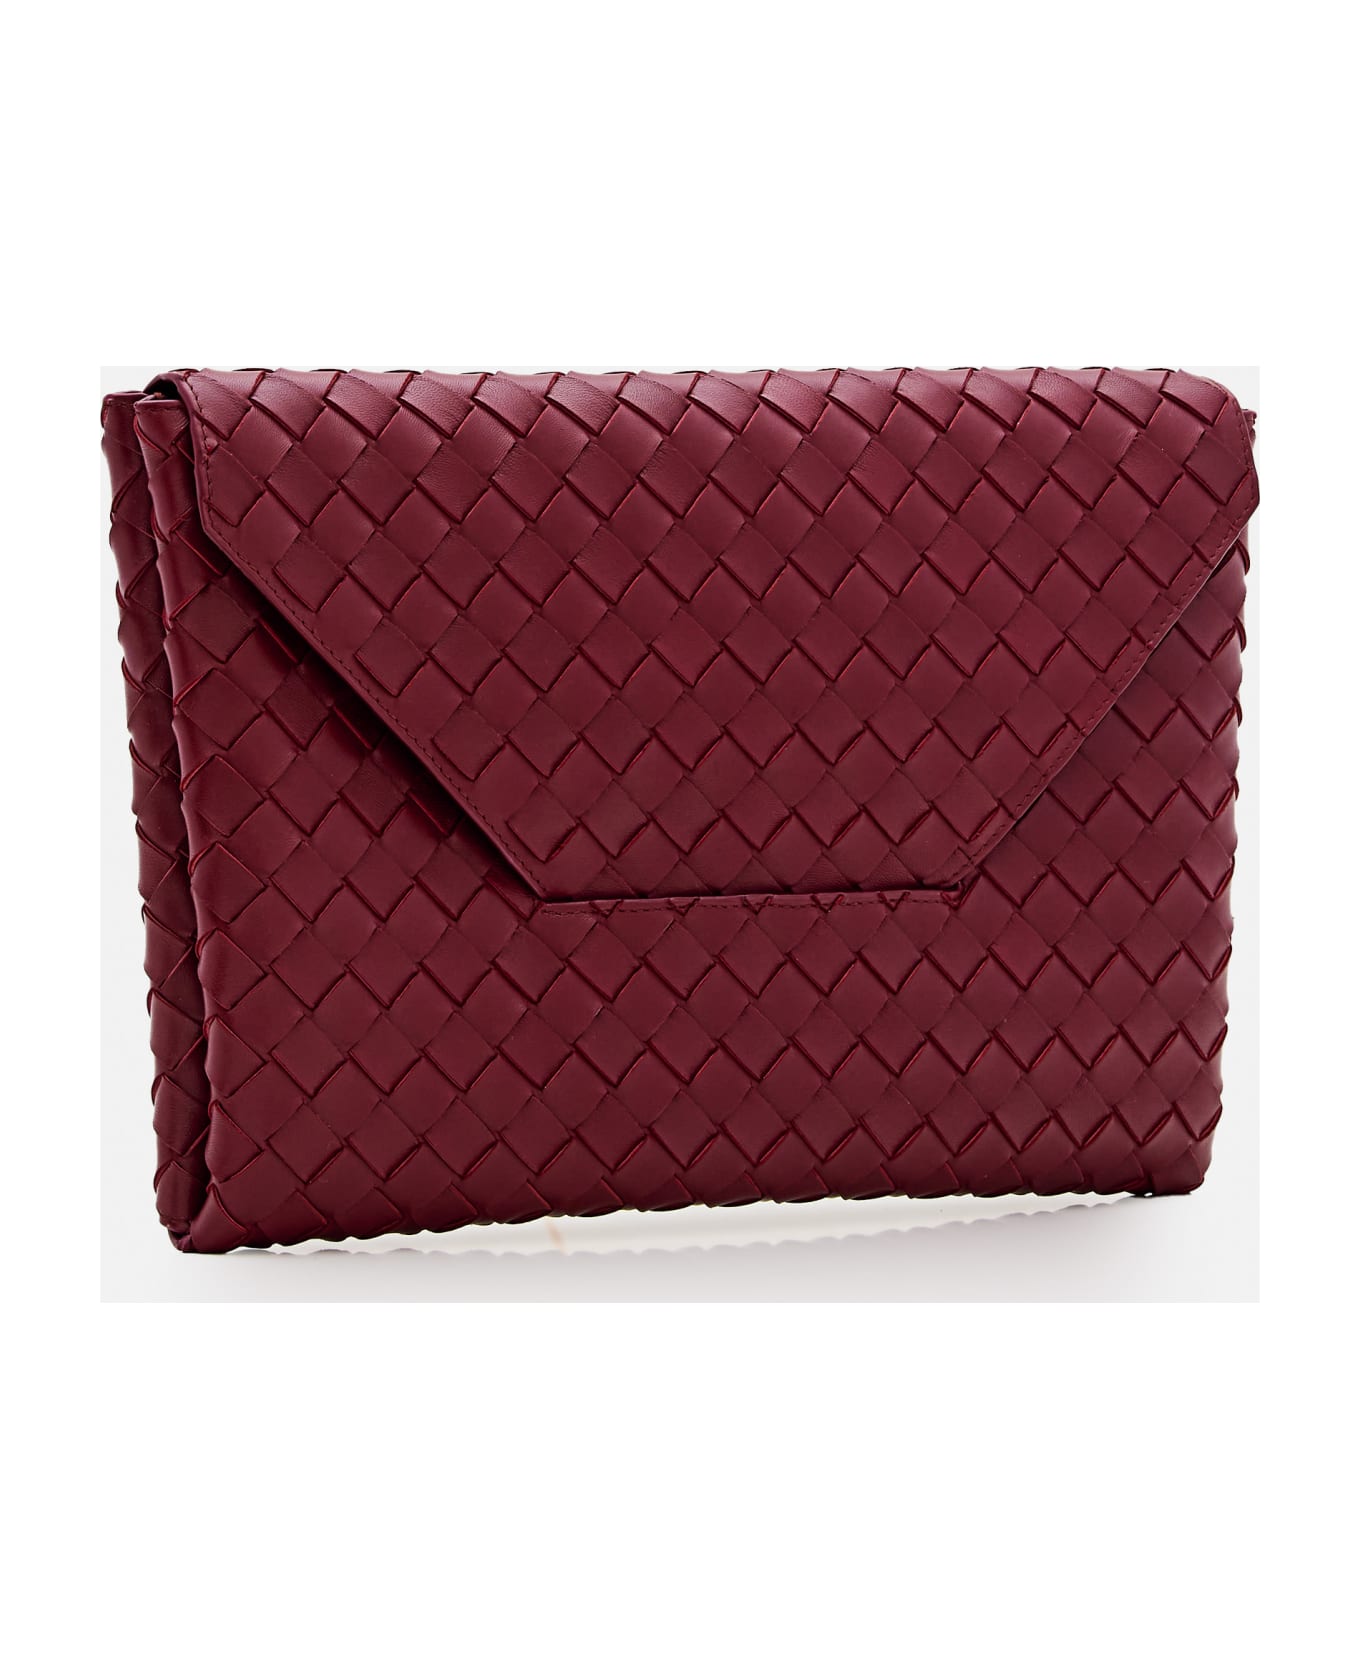 Bottega Veneta Origami Large Envelope Leather Bag - Red クラッチバッグ